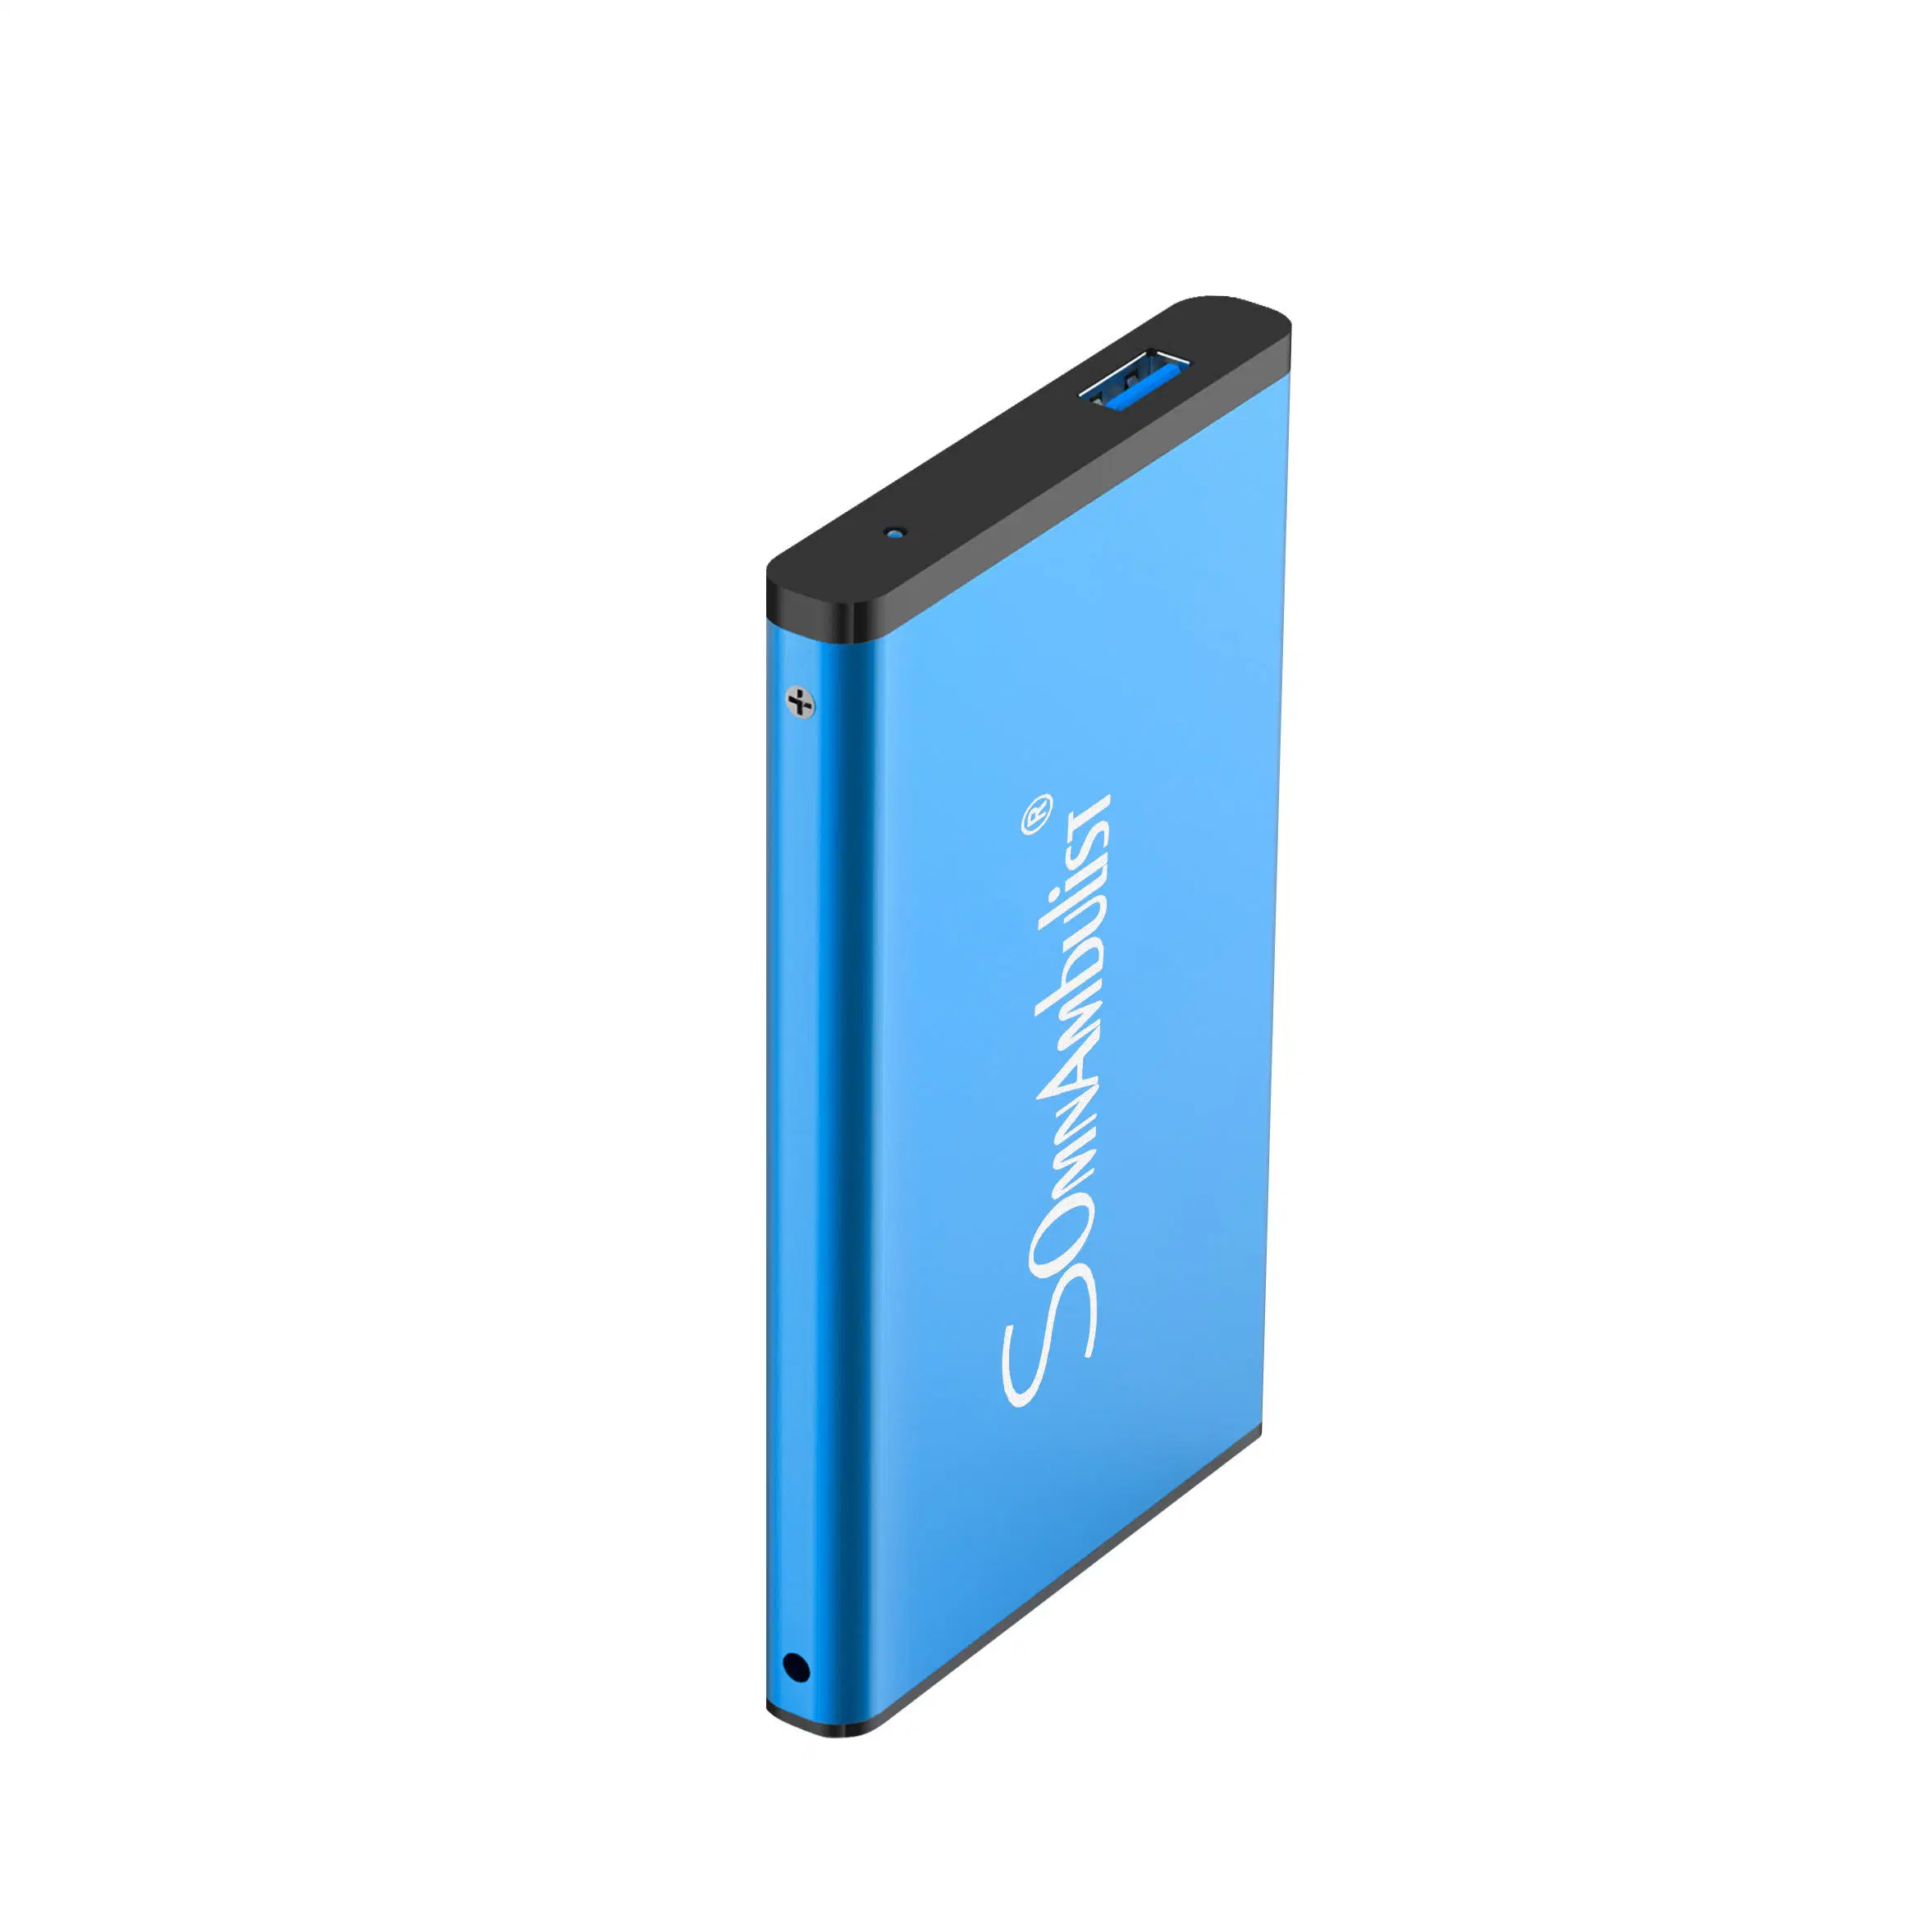 Gjhd05 disco duro externo 1TB o 2TB disco duro dispositivo de almacenamiento extraíble Para equipos de sobremesa y portátiles con USB de 3,0 2,5 pulgadas